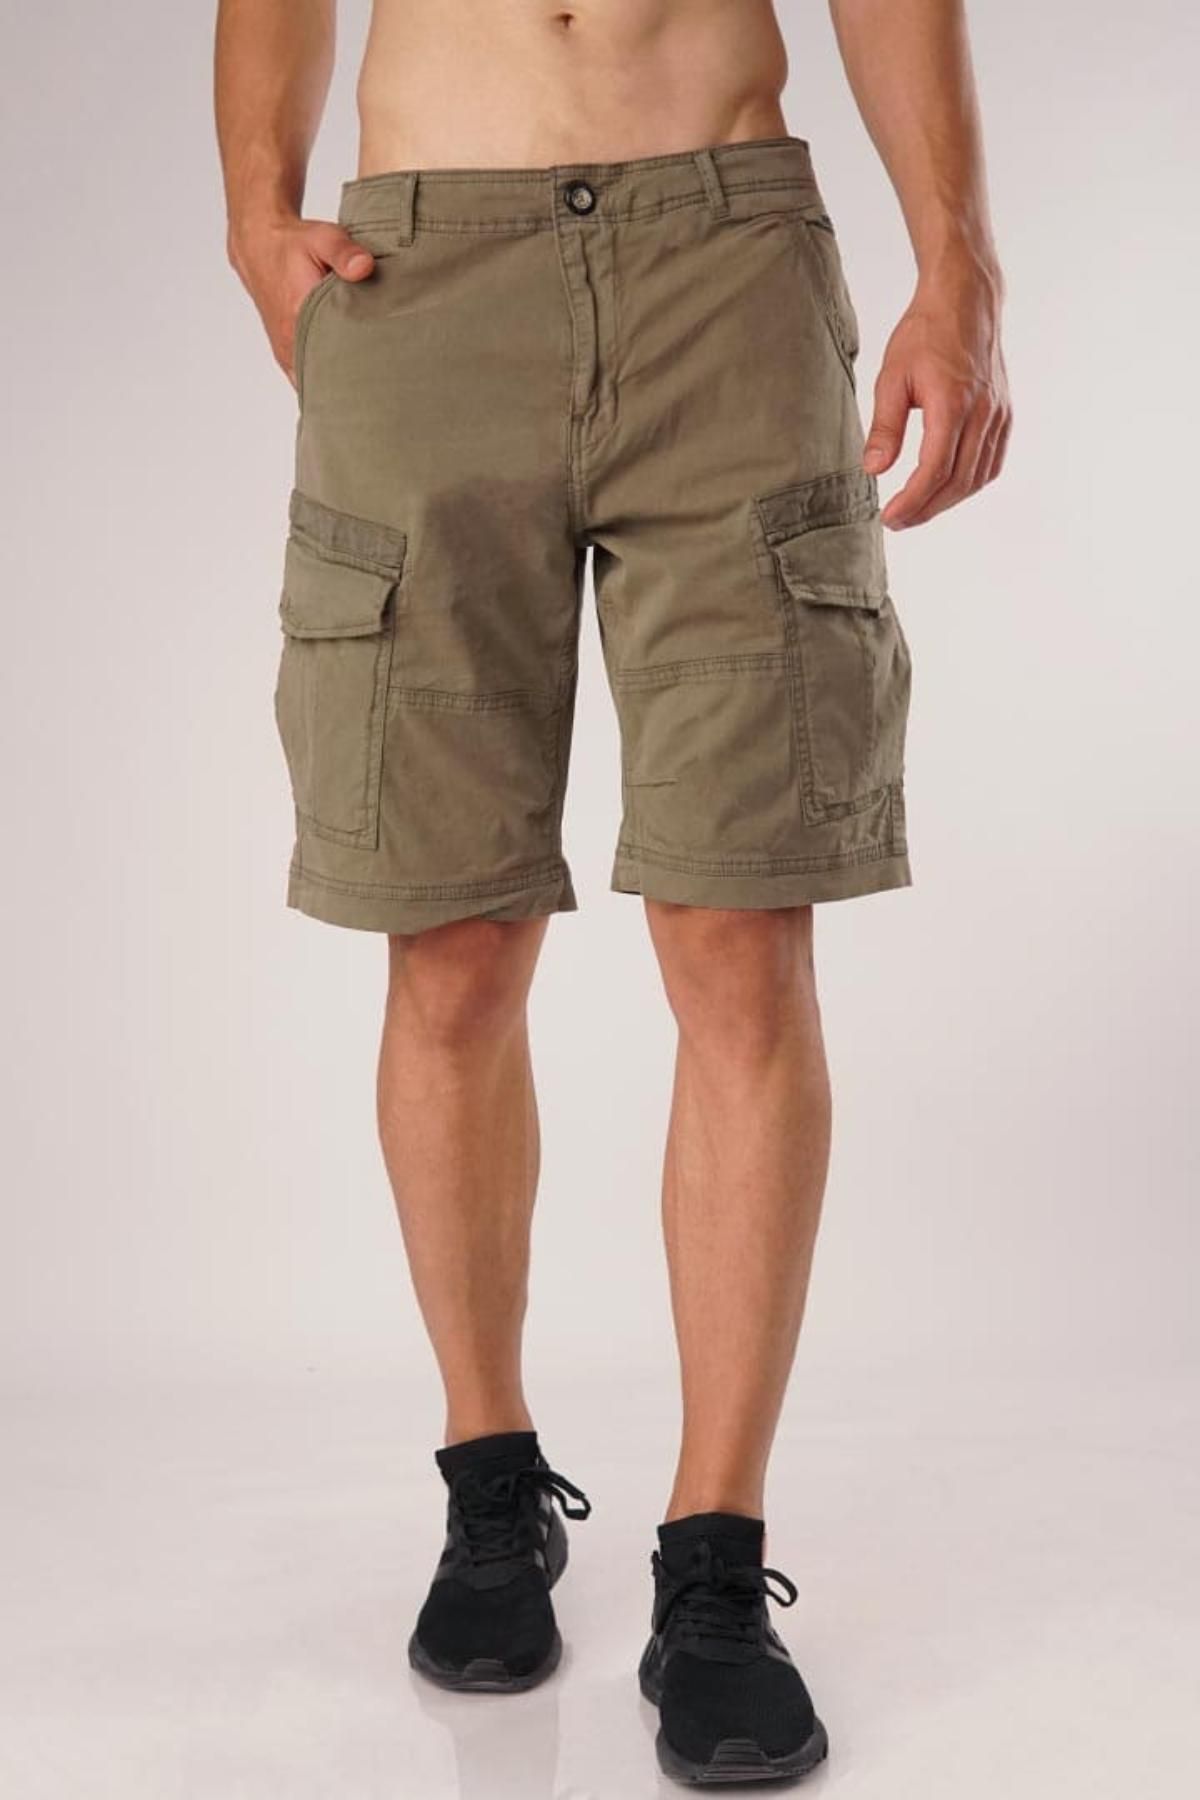 MENDEEZ Military Cargo Shorts Olive Green Men Shorts